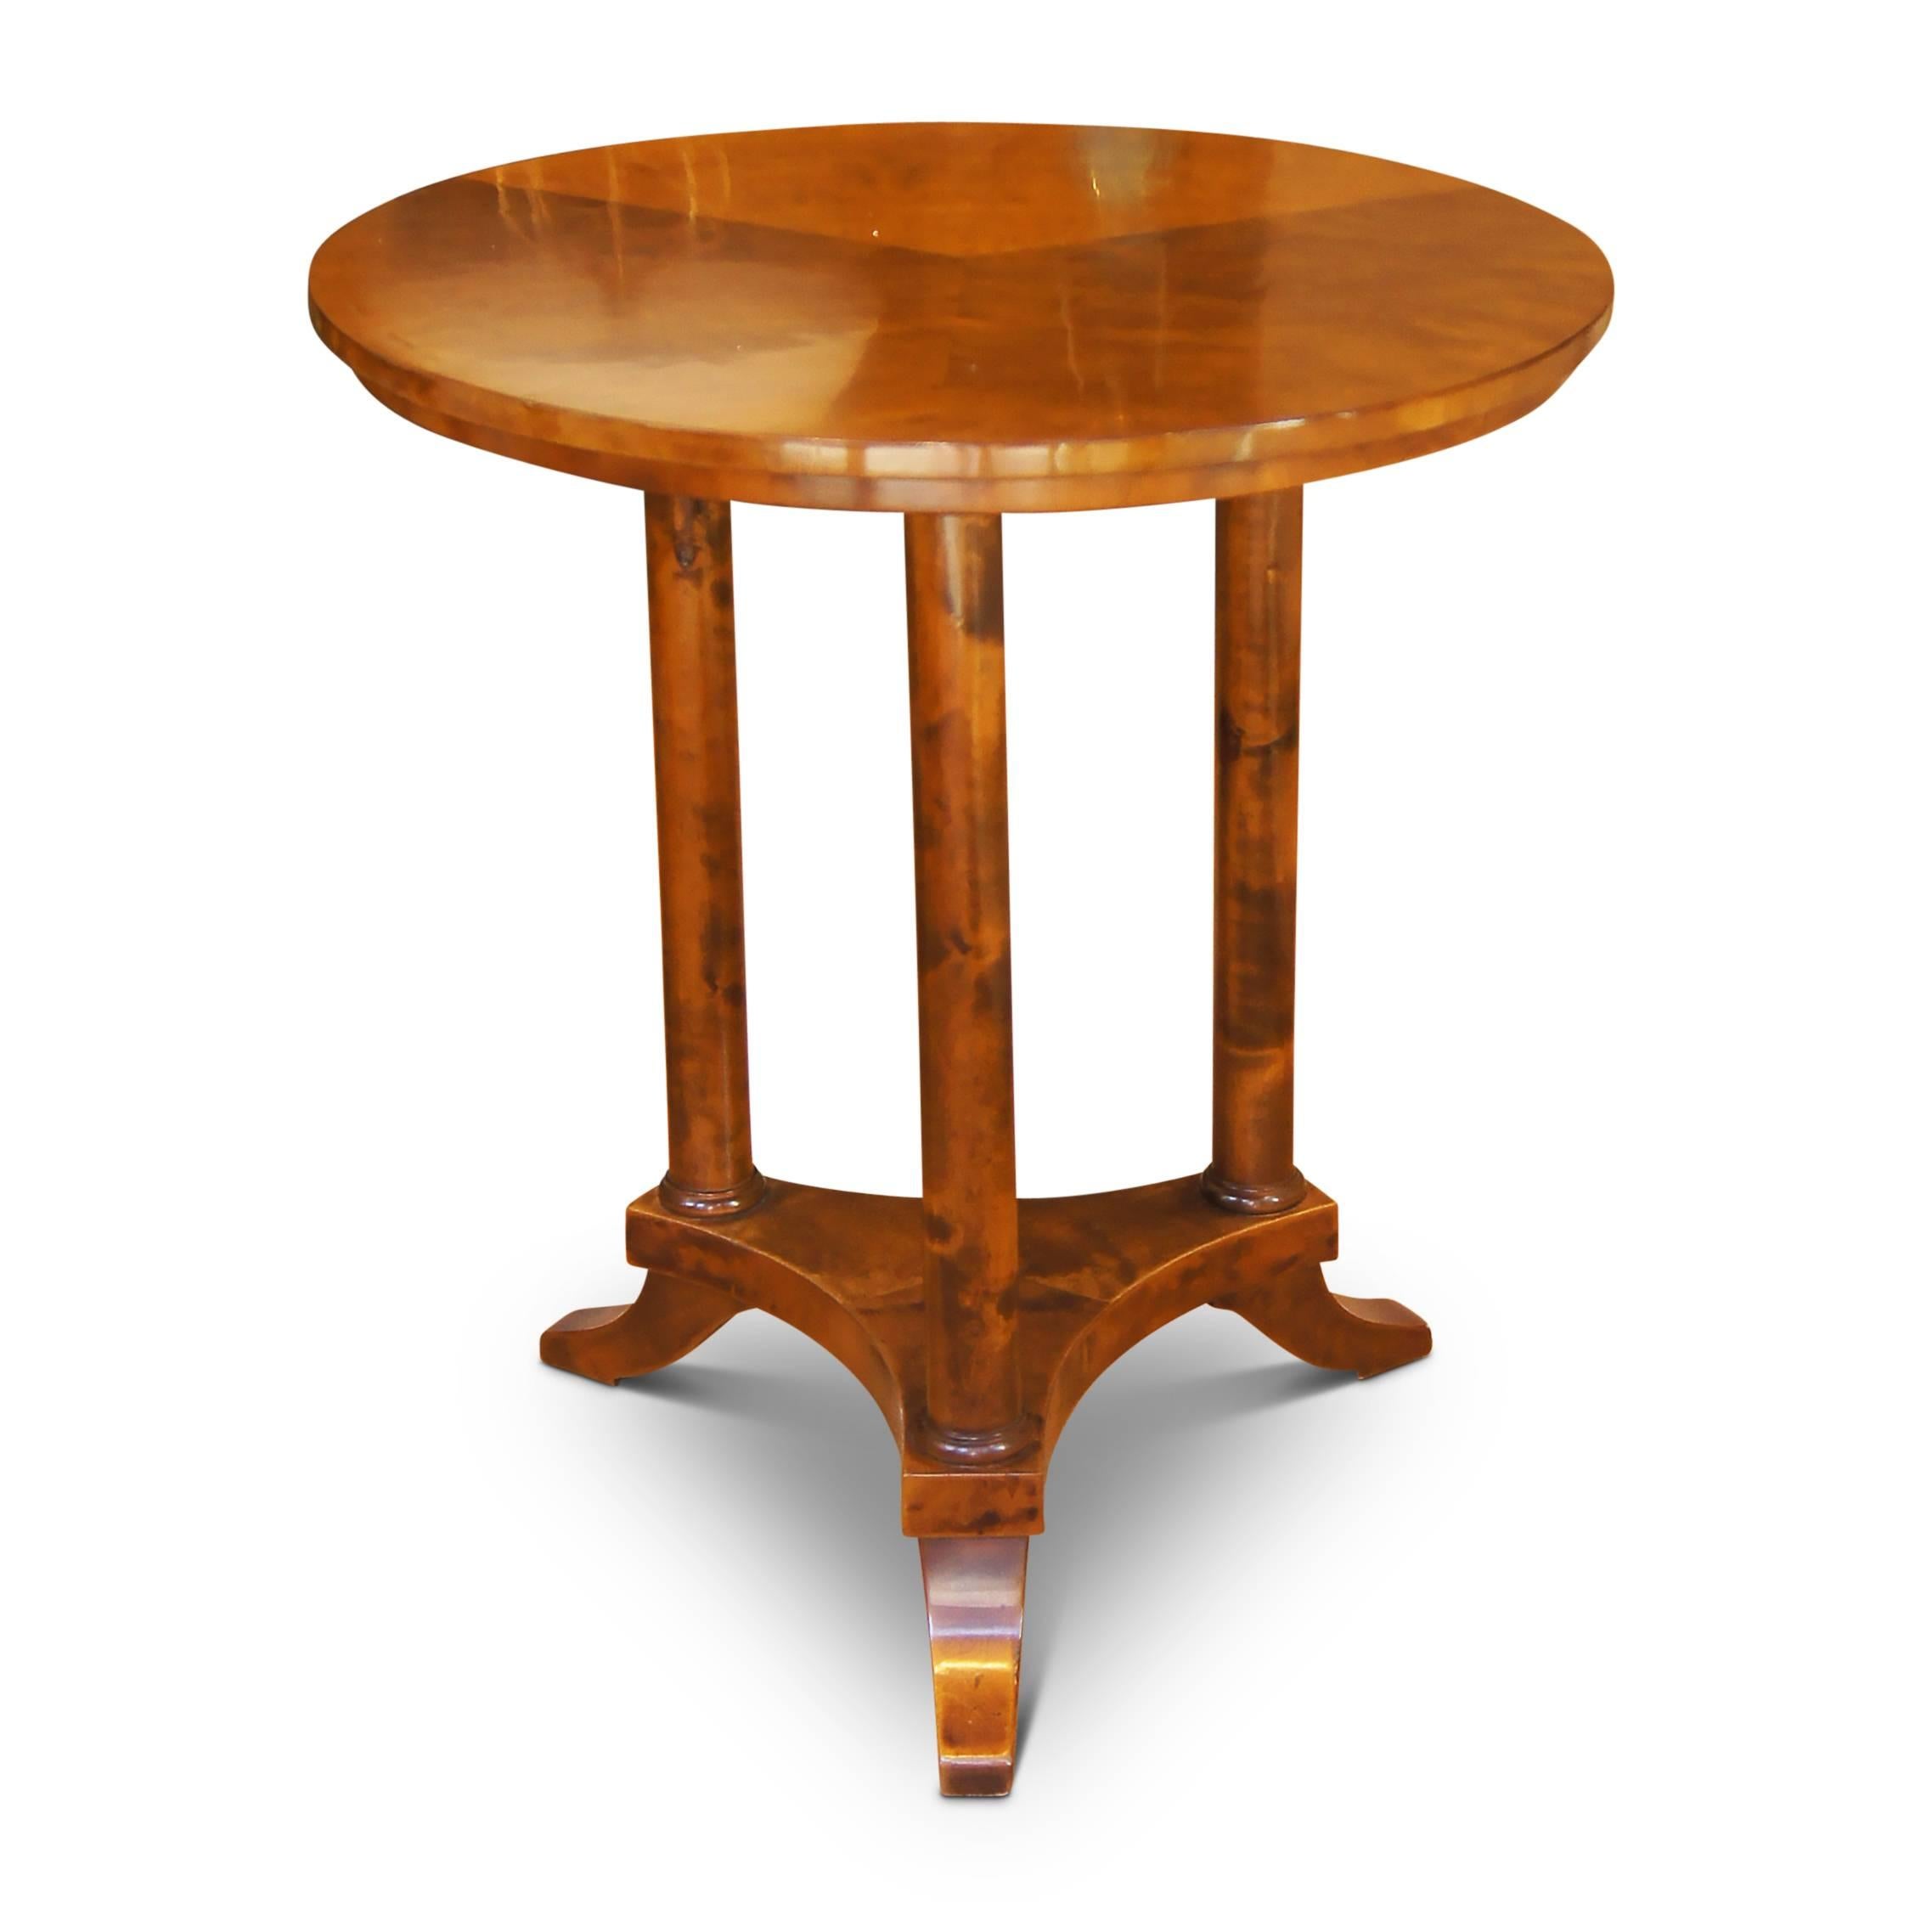 Art Deco Pair of side tables in birch by Nordiska Kompaniet attrib. to Axel Einar Hjorth For Sale